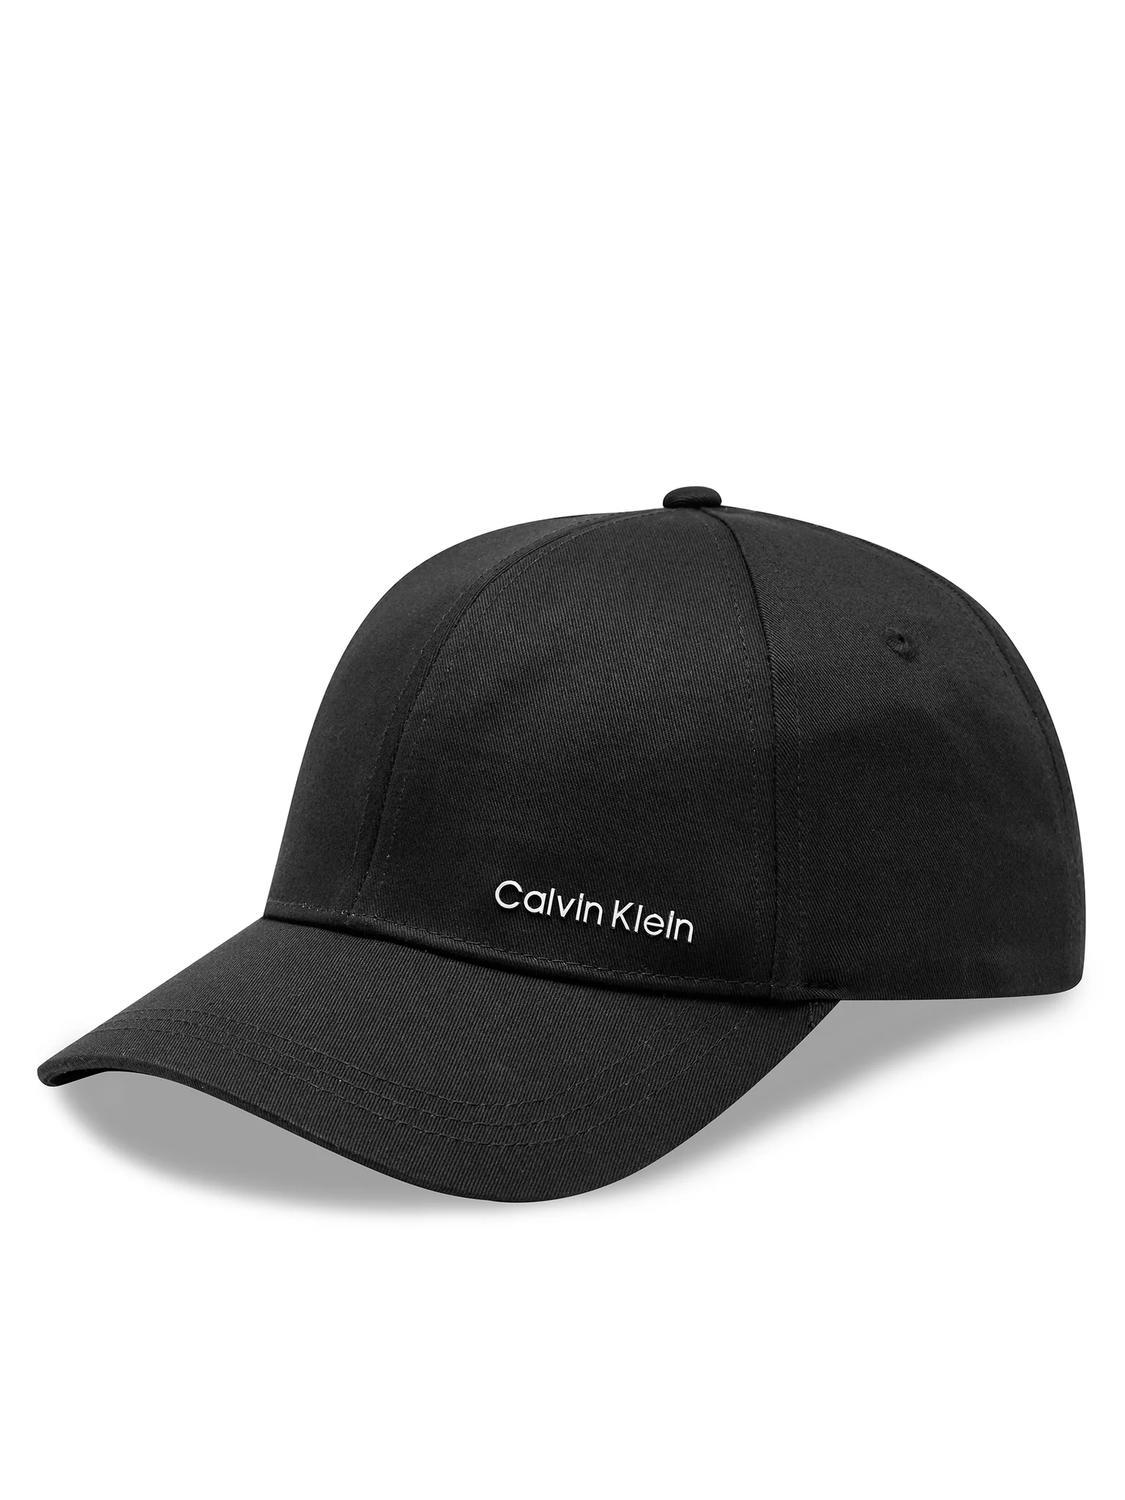 Black Prices! Buy Ck Bb At Lettering Klein - Hat Baseball Outlet Metal Calvin